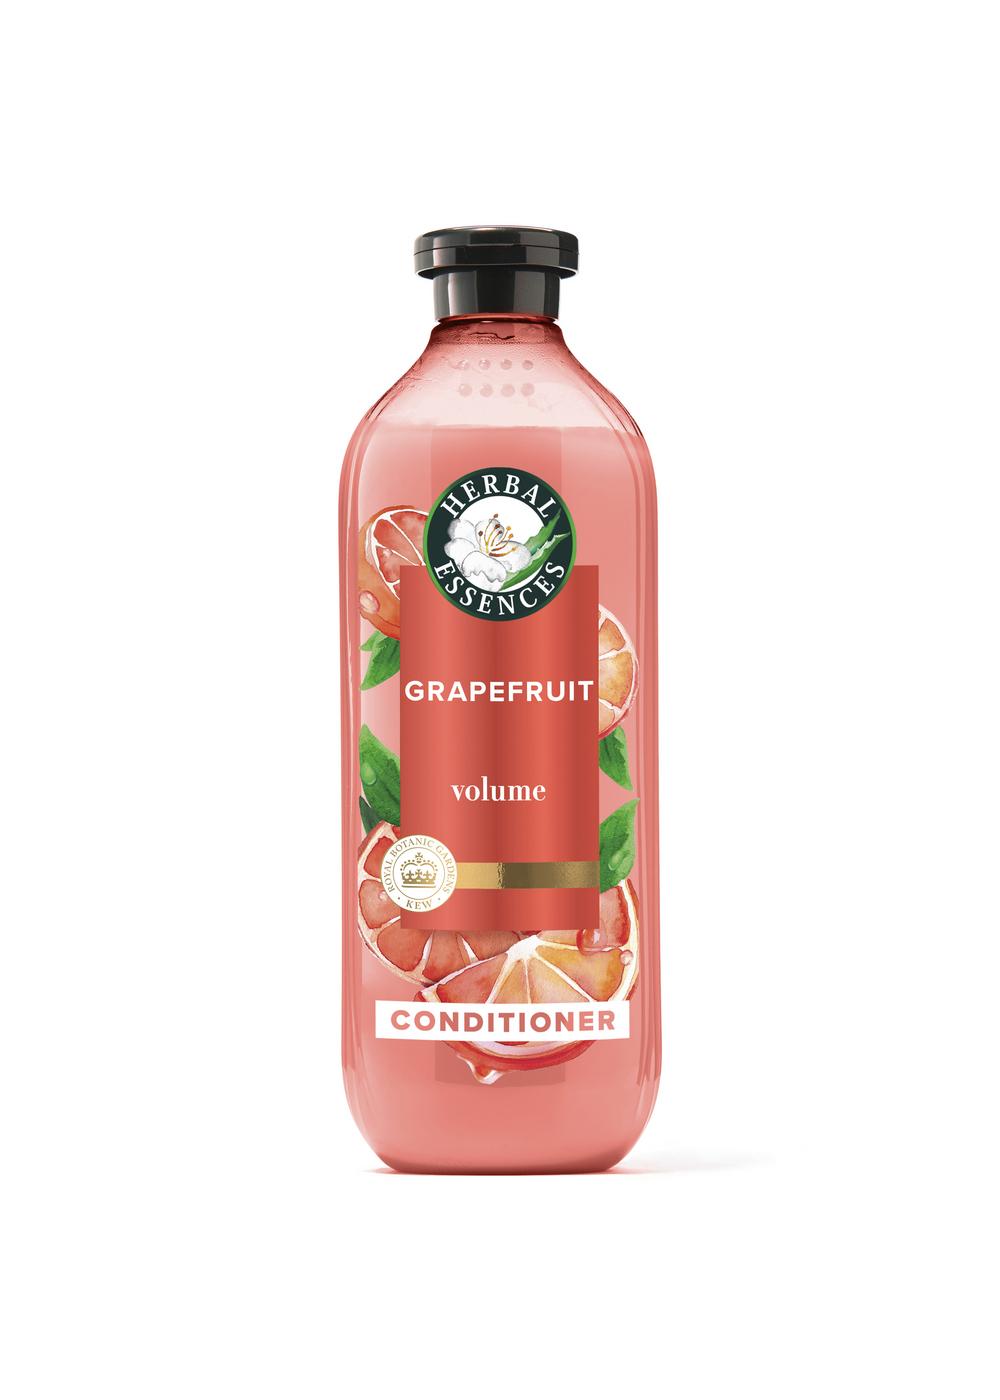 Herbal Essences Grapefruit Volumizing Conditioner; image 9 of 13